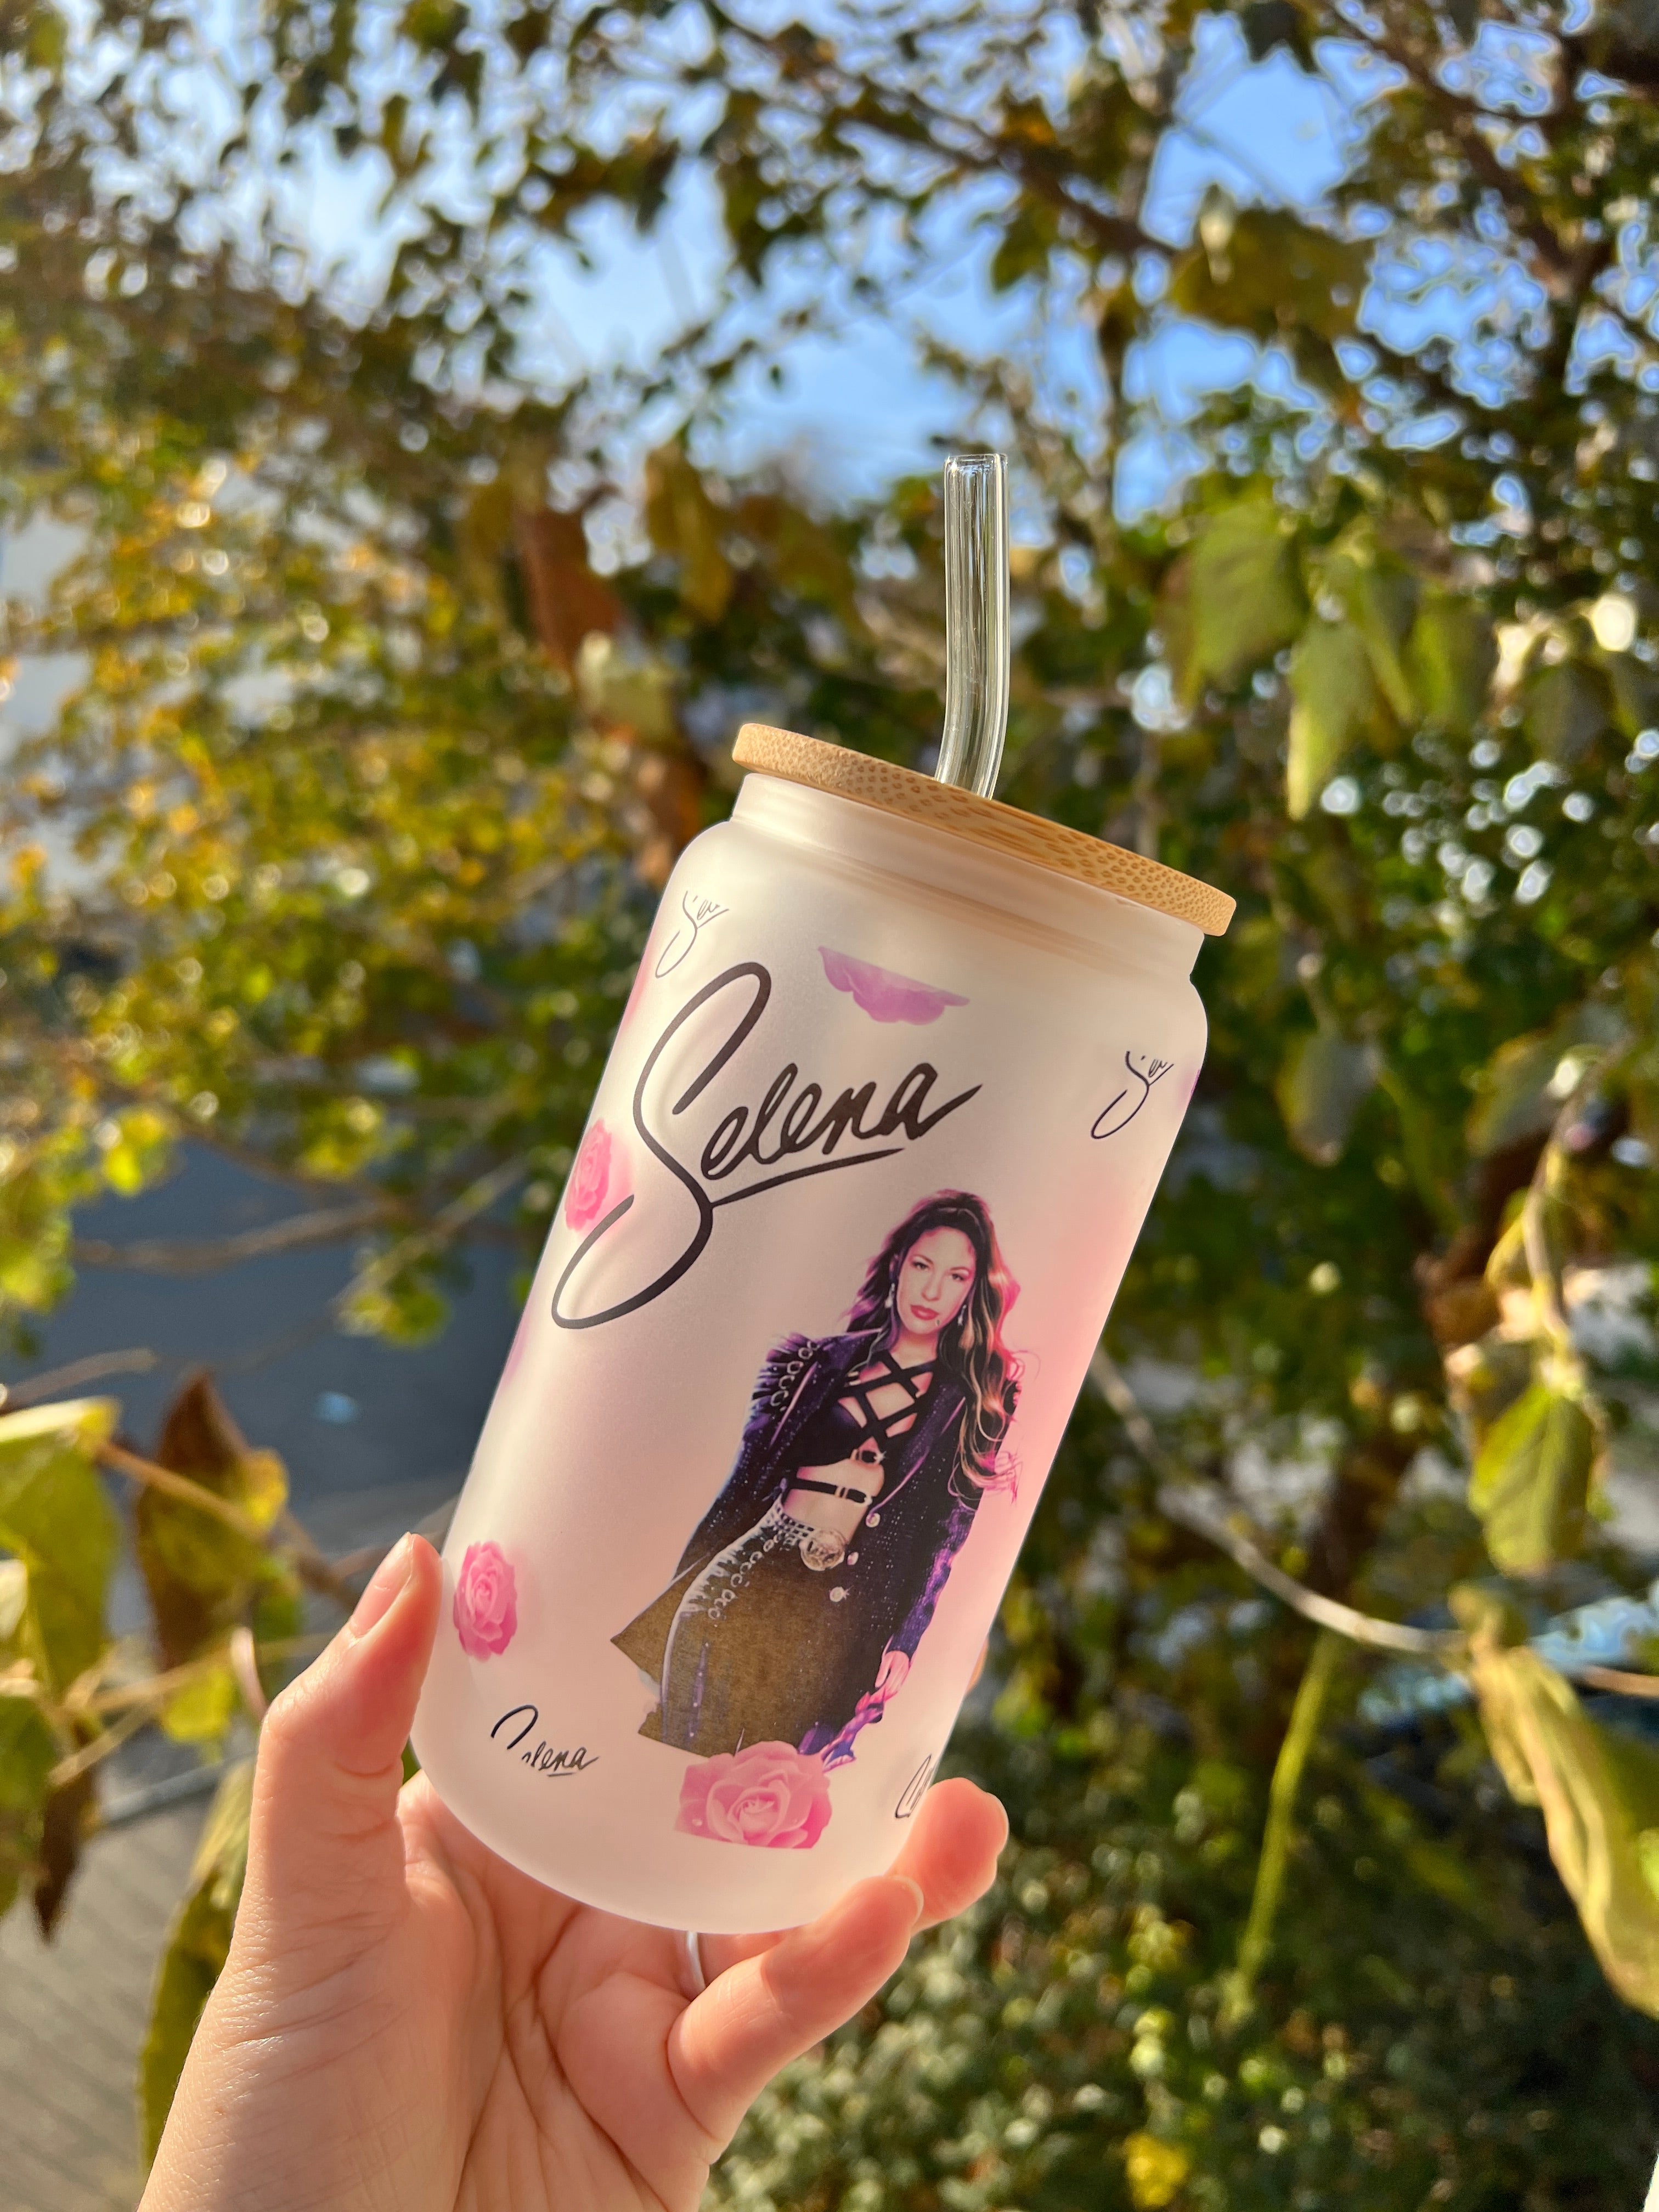 16oz Selena glass cup